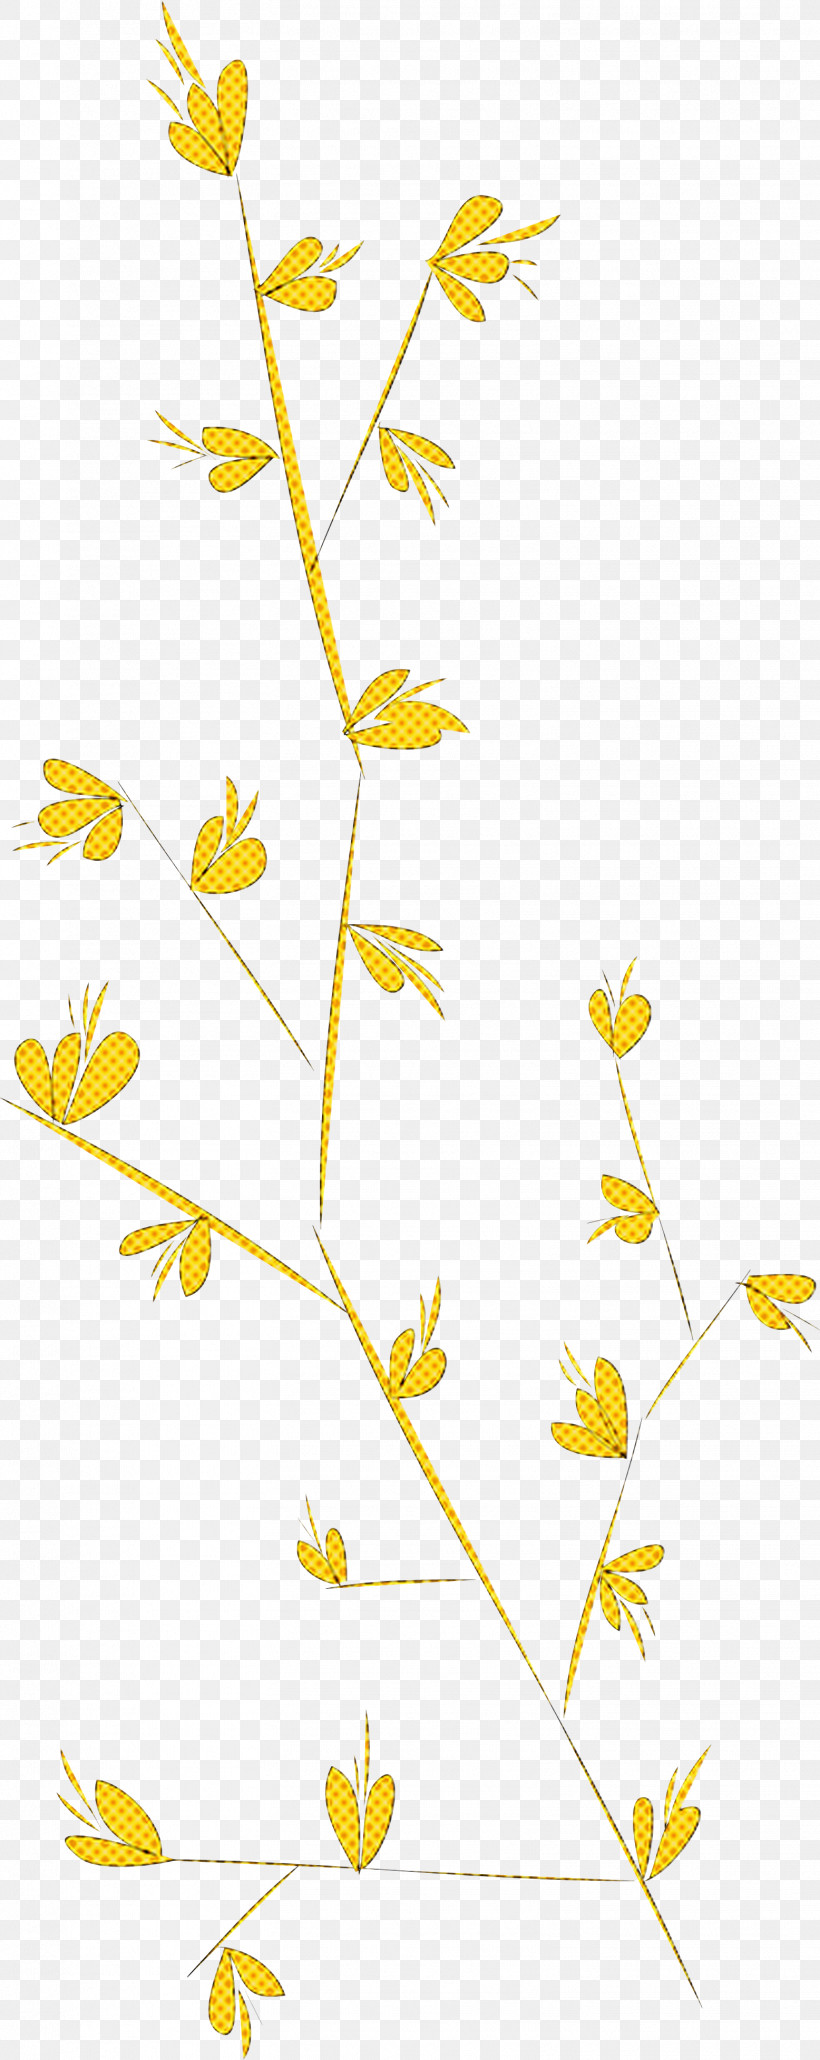 Simple Leaf Simple Leaf Drawing Simple Leaf Outline, PNG, 1556x3910px, Simple Leaf, Cartoon, Drawing, Floral Design, Leaf Download Free